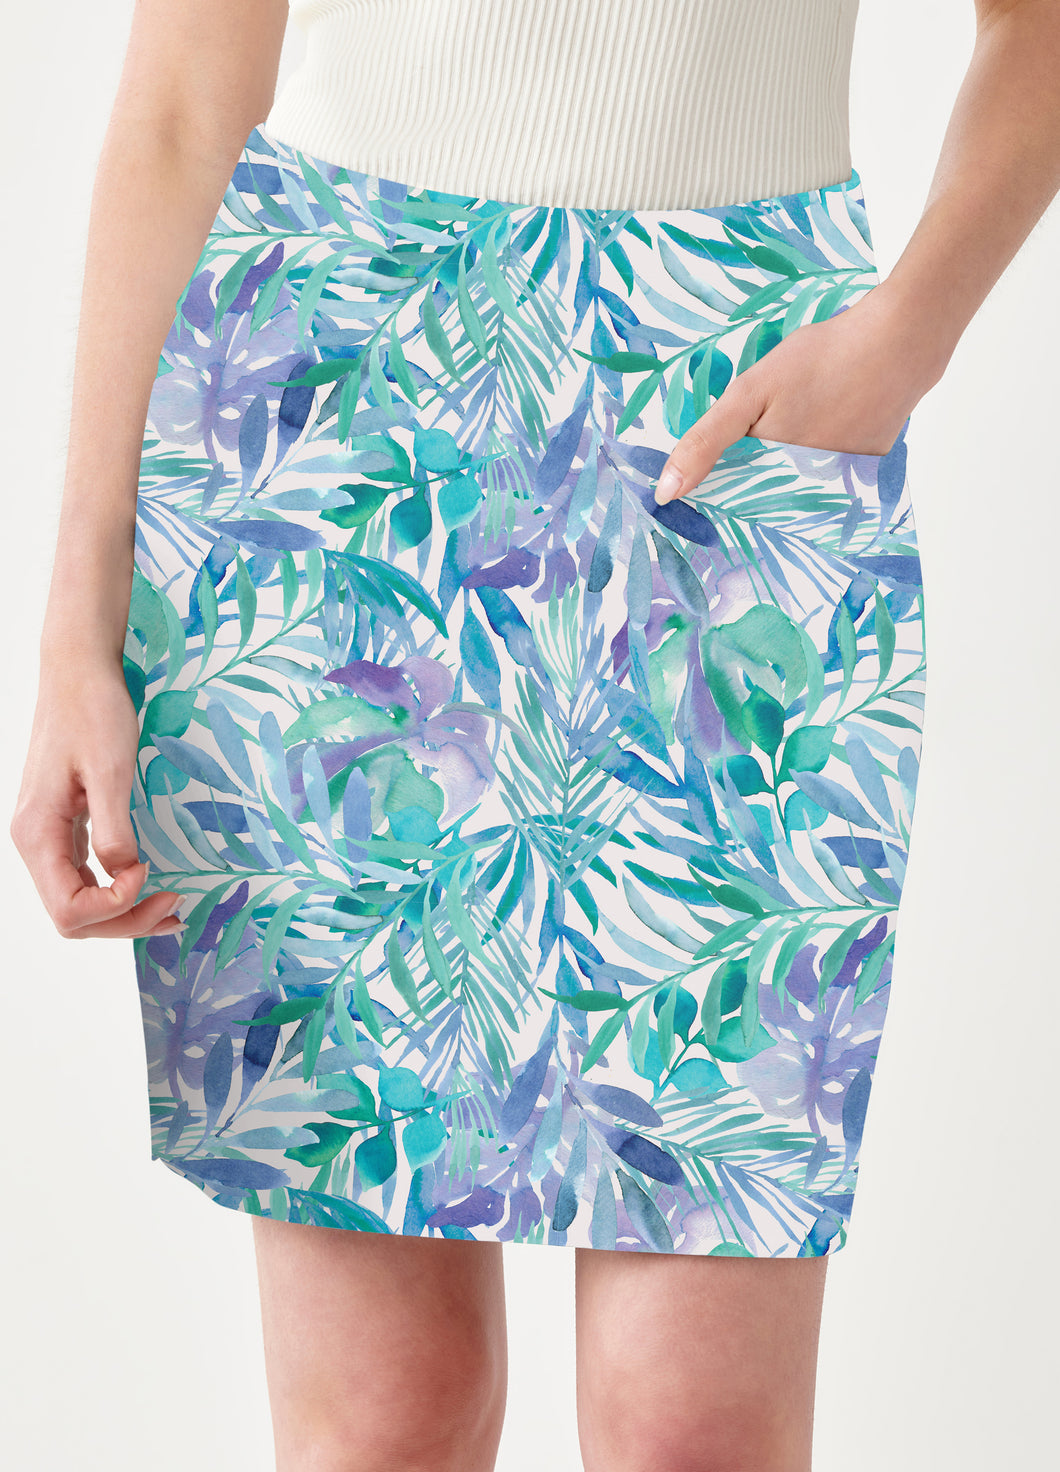 Laguna Clubhouse Skirt - Water Colour Palm